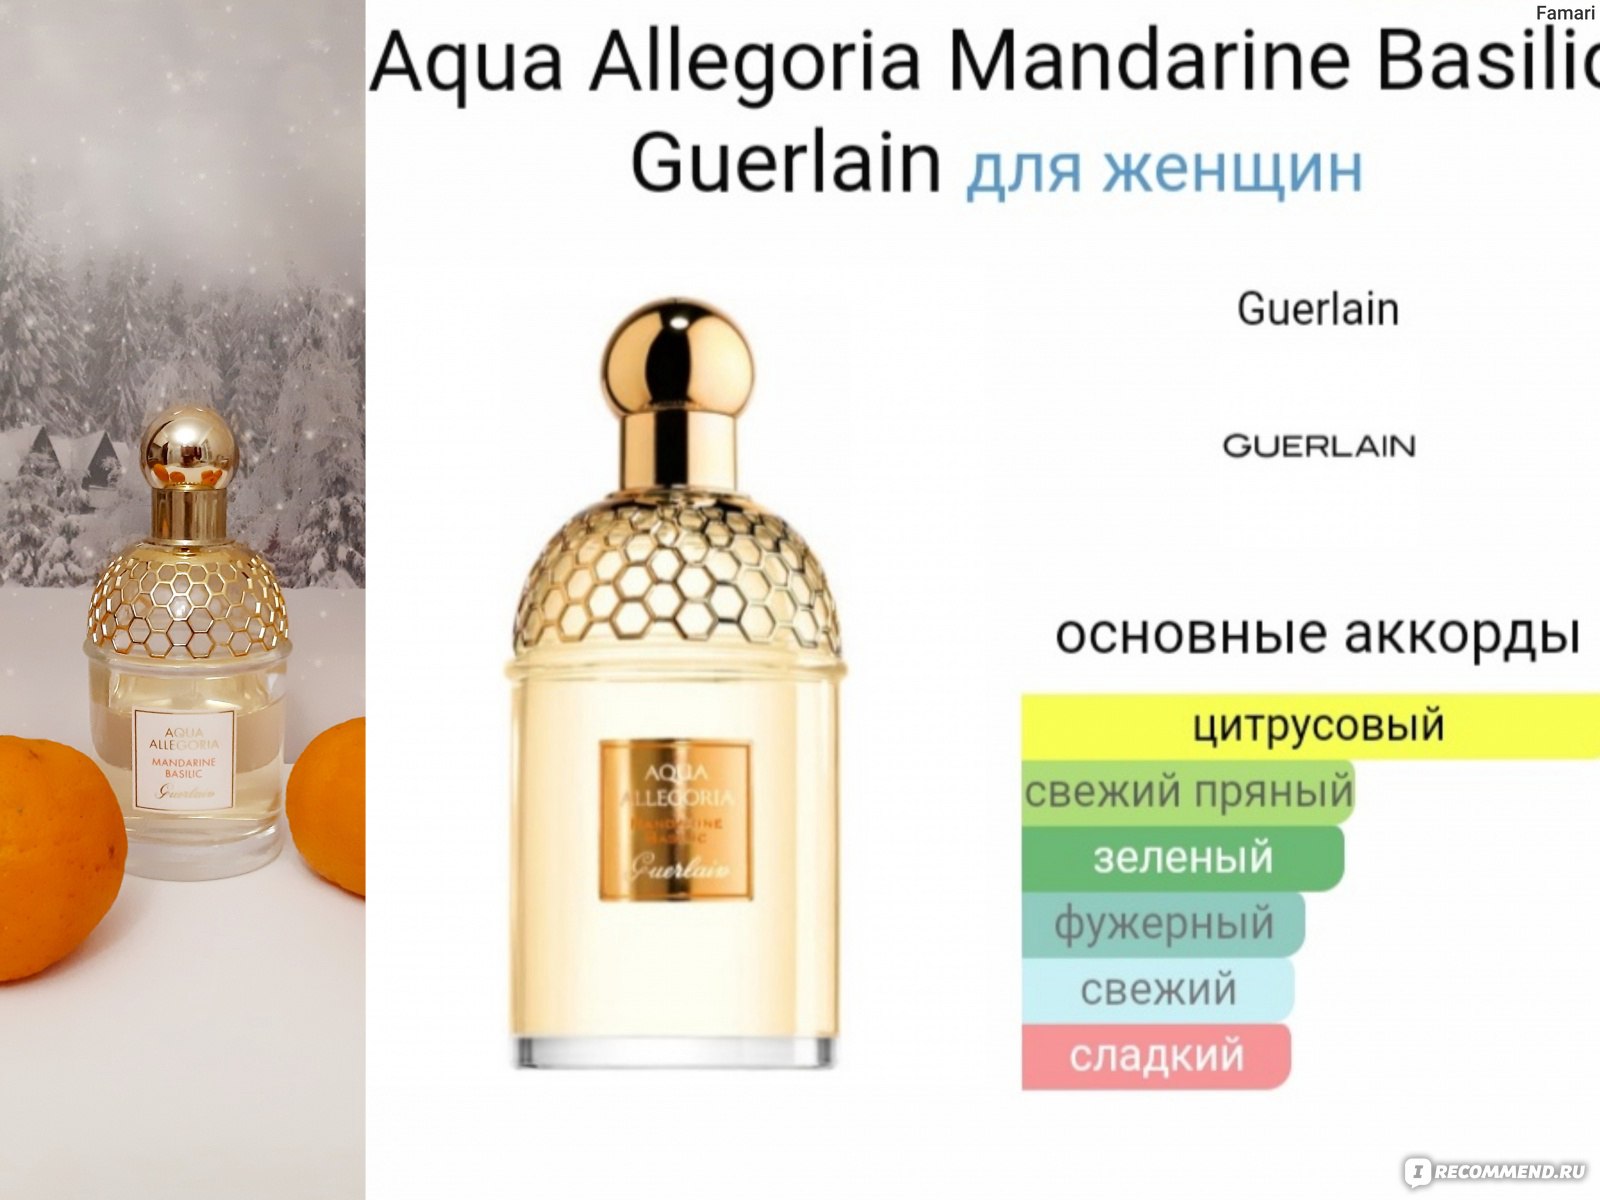 Guerlain aqua allegoria mandarine basilic туалетная вода